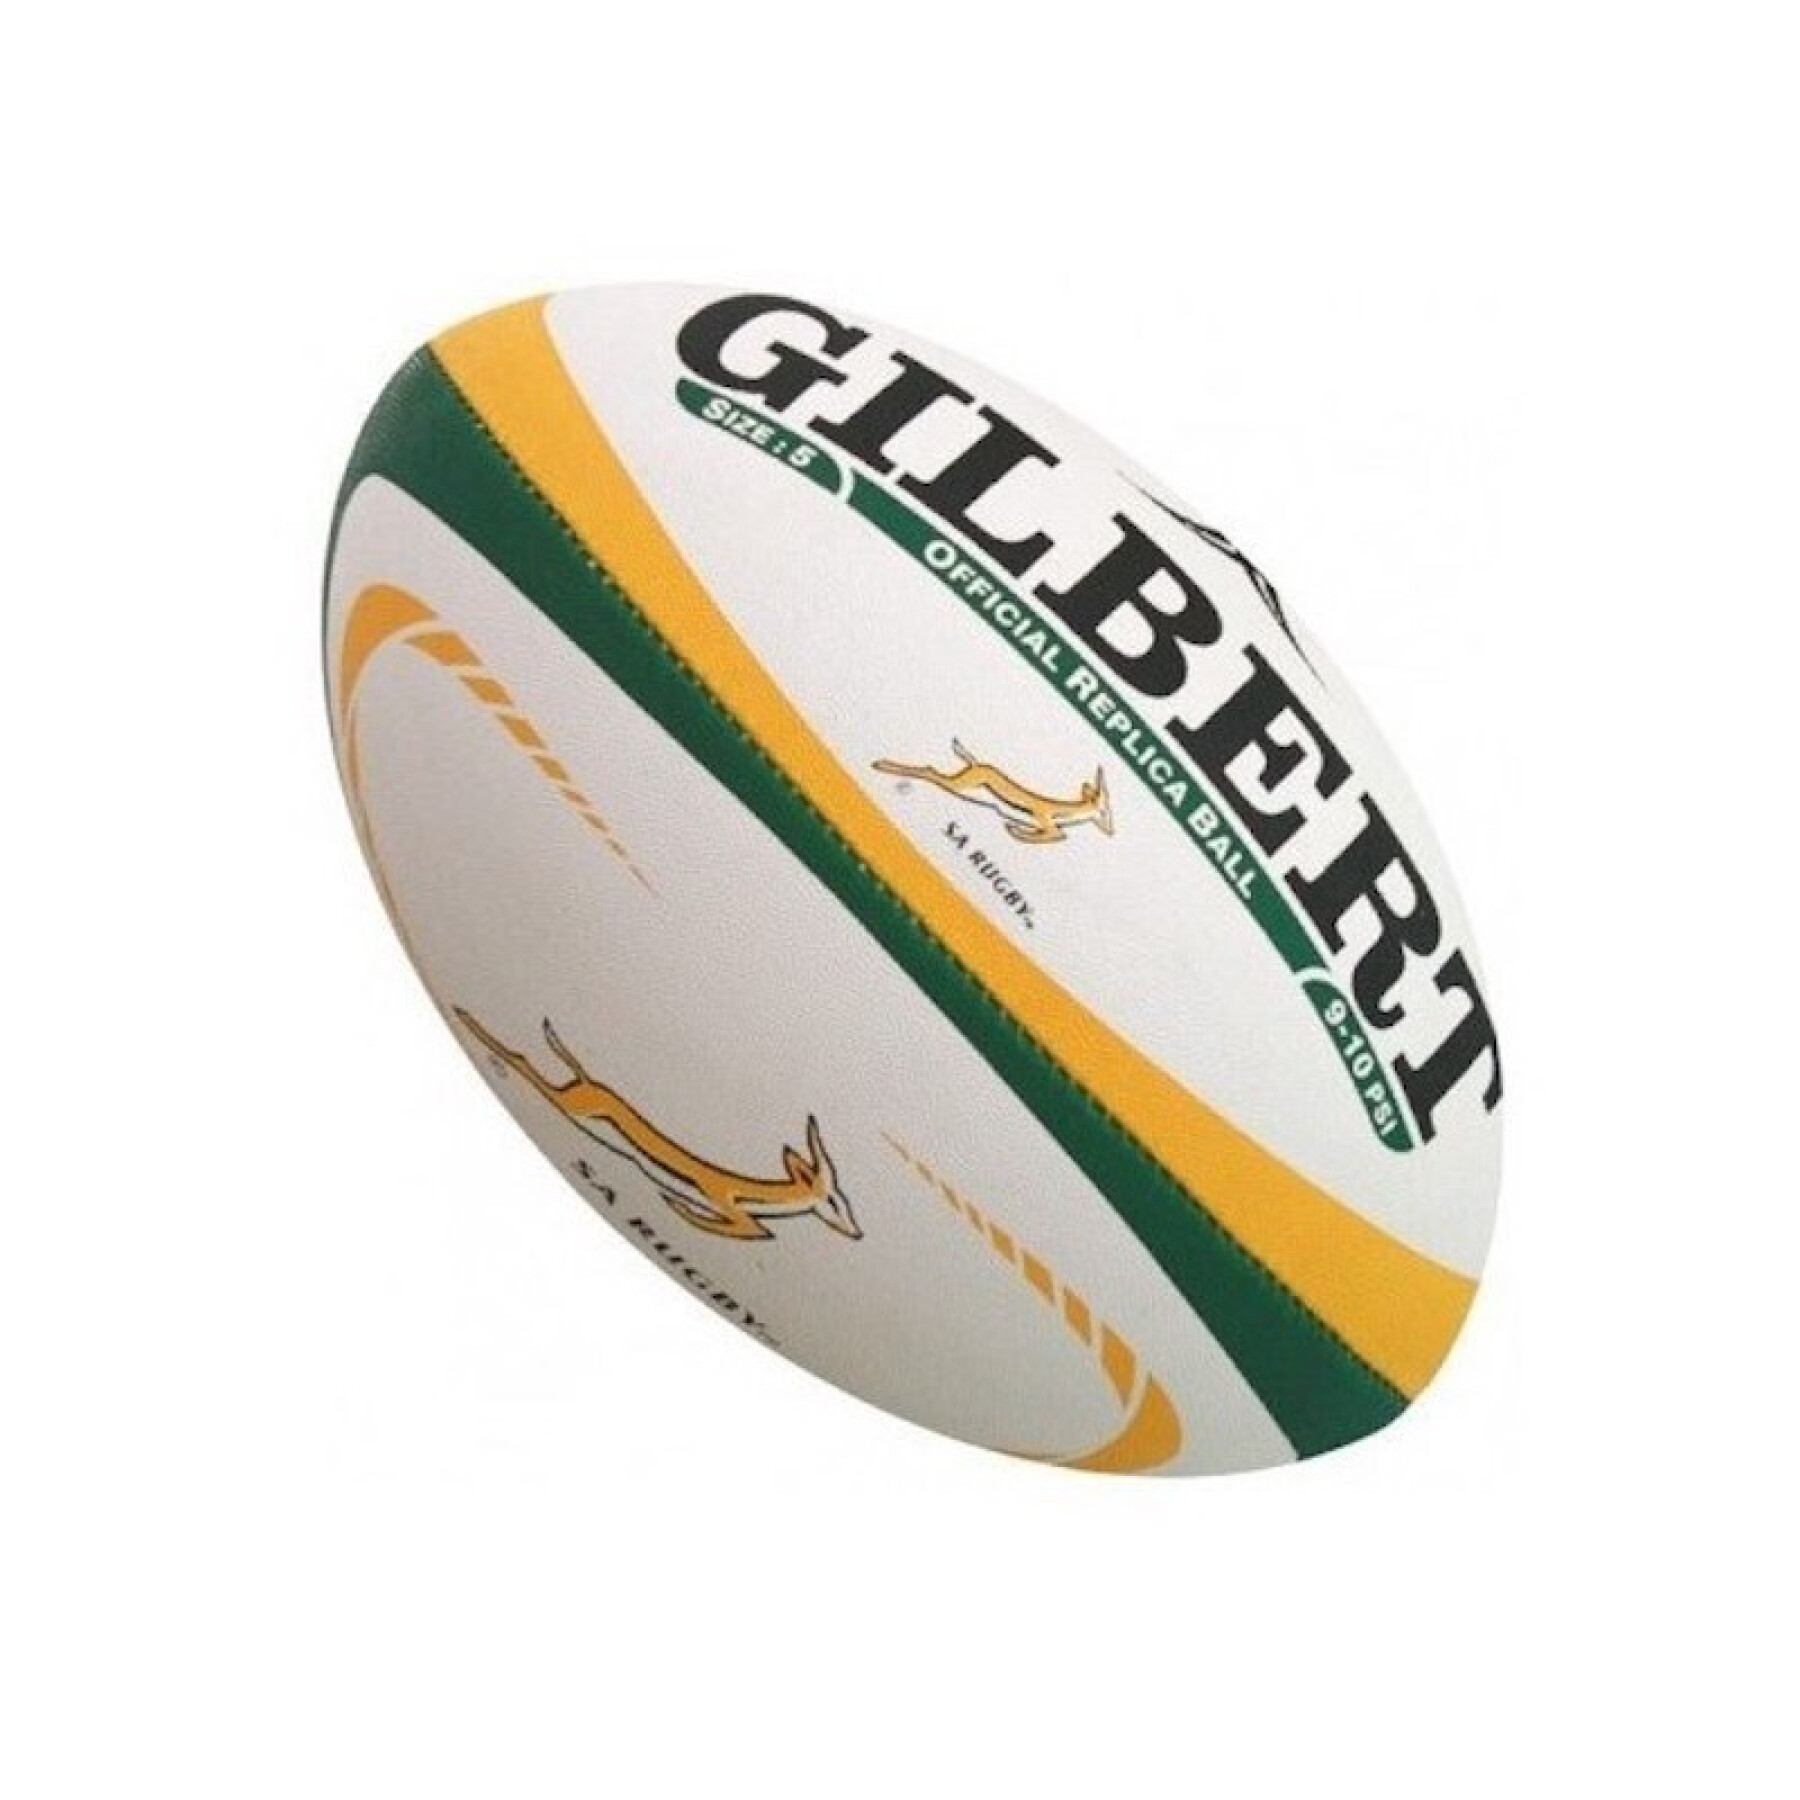 Ballon de rugby Replica Gilbert Afrique du Sud (taille 5)